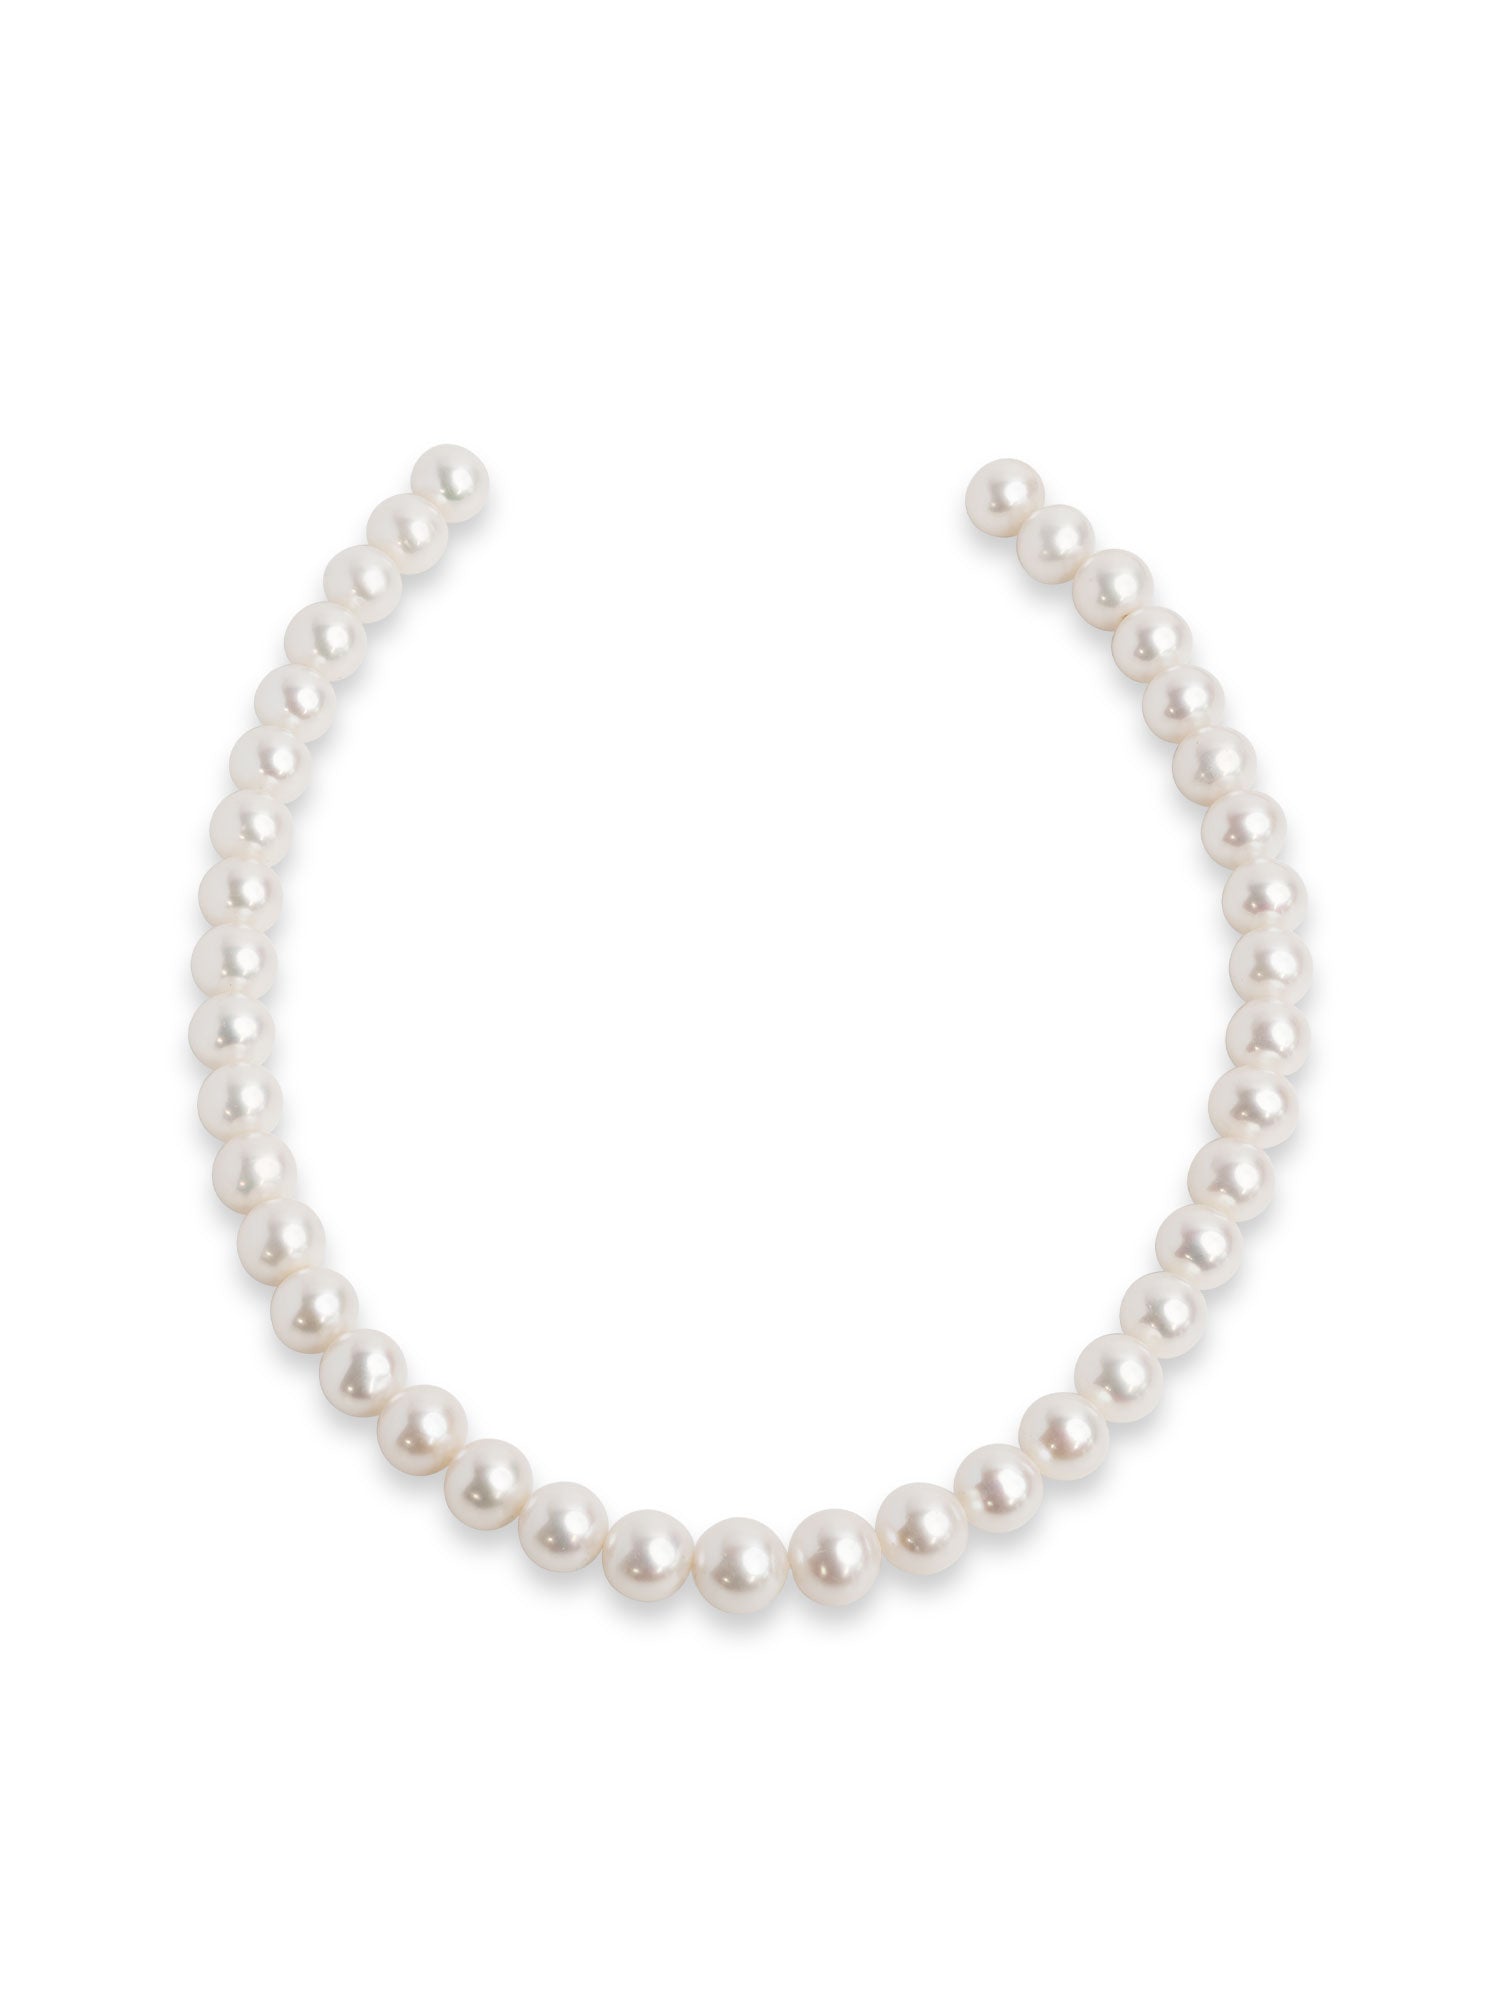 Collar de perlas cultivadas naturales de agua dulce edison de 11 a 12 mm Secret & You